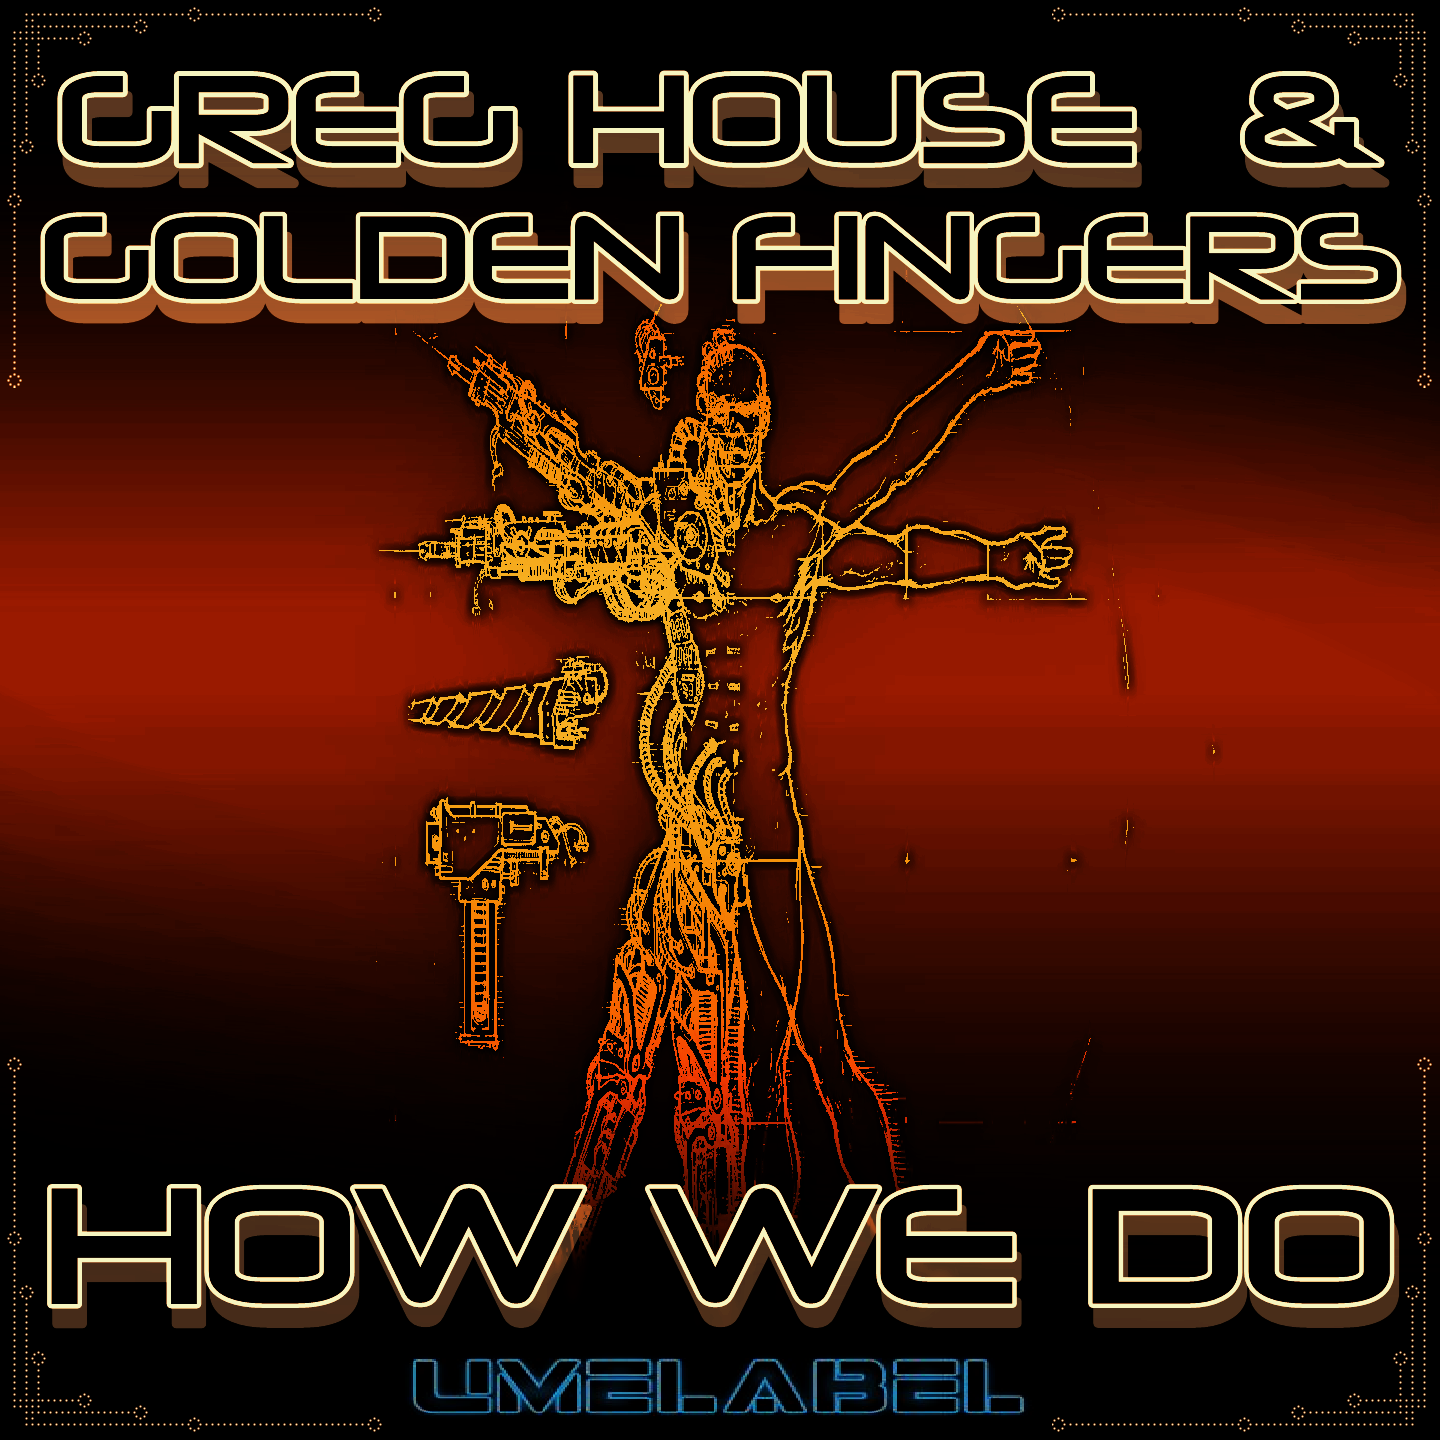 Greg House & Golden Fingers - How We Do (Original Mix).png : ★ Greg House & Golden Fingers - How We Do (Original Mix) ★